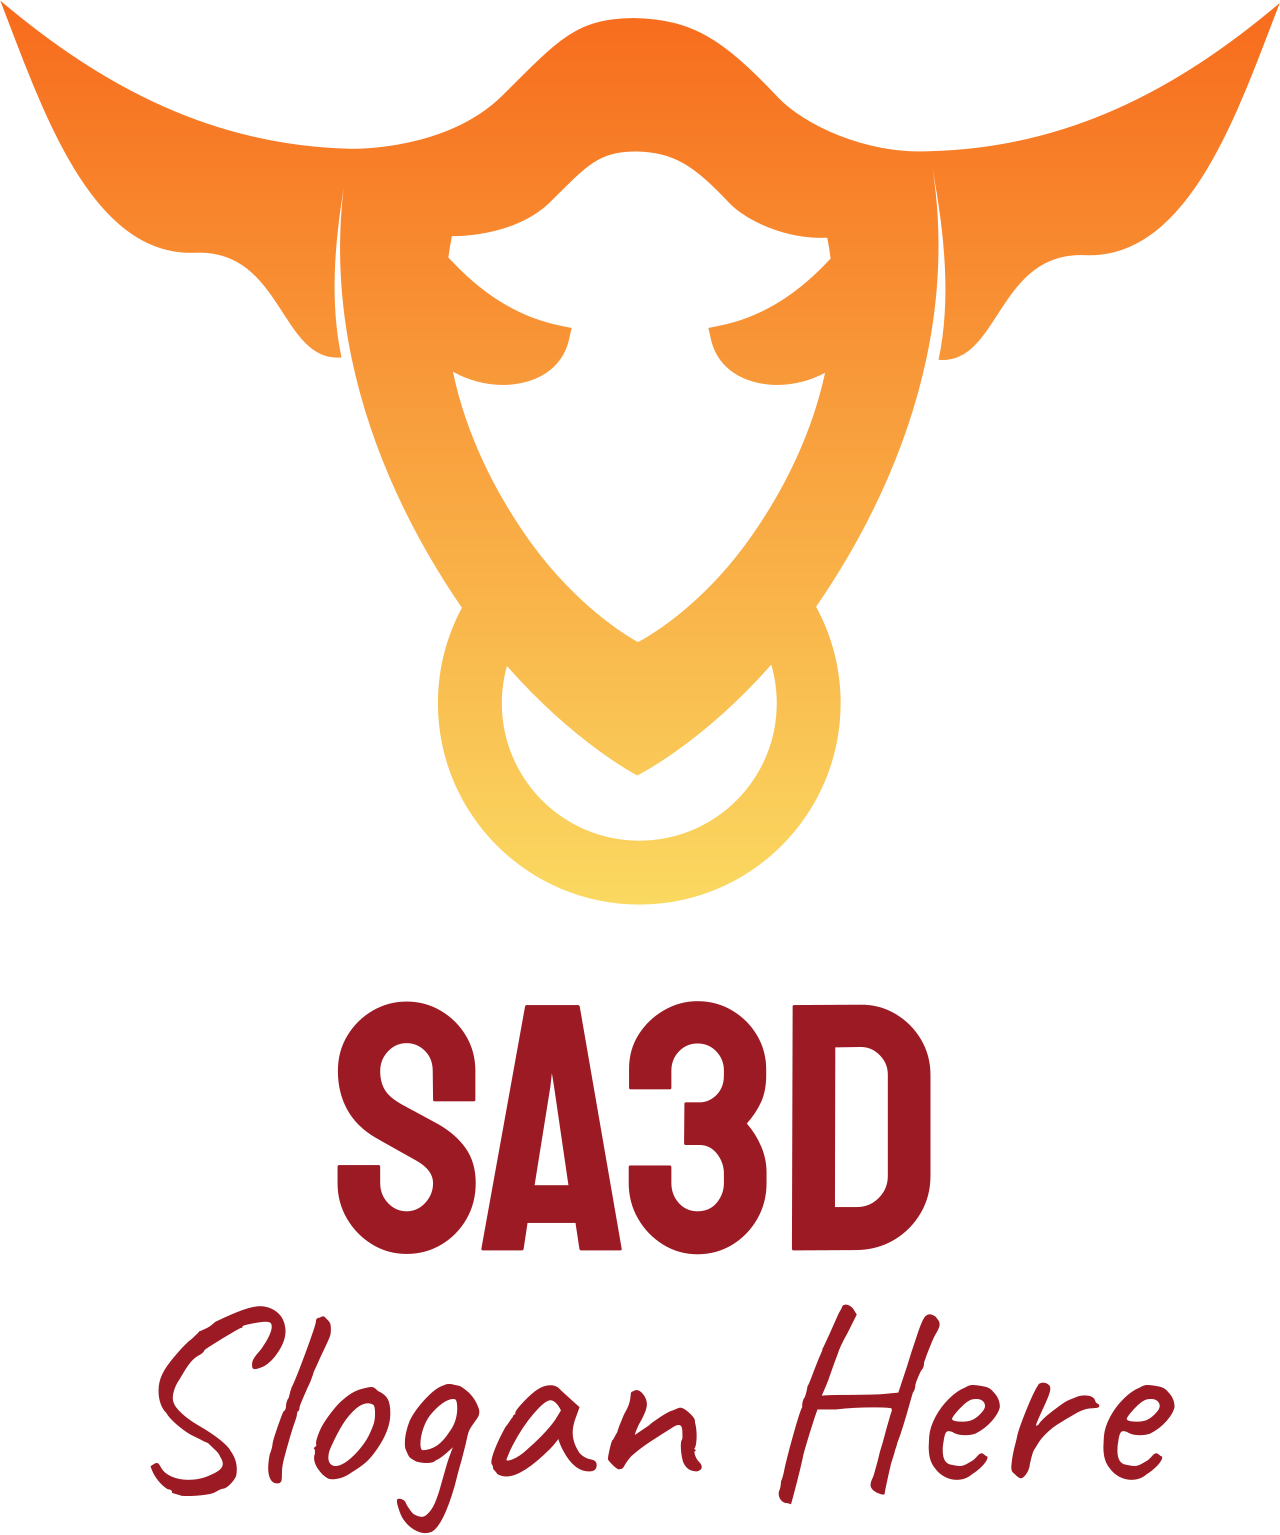 Sa3d's web page